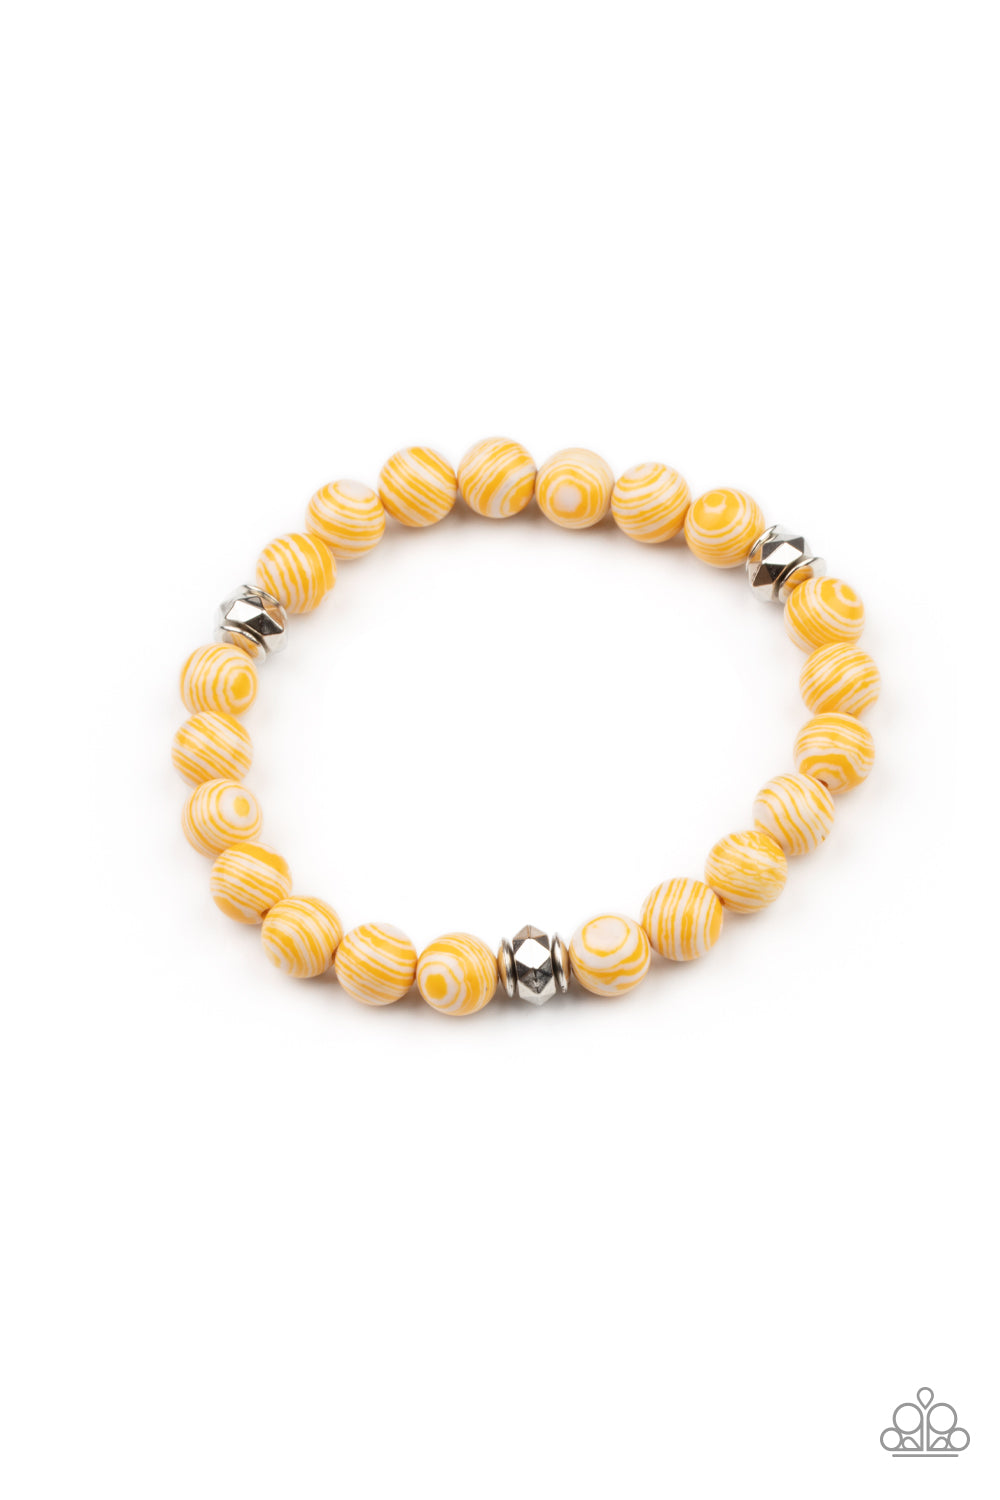 Awakened - Yellow and White Marble Bead Stretchy Bracelet - Paparazzi Accessories